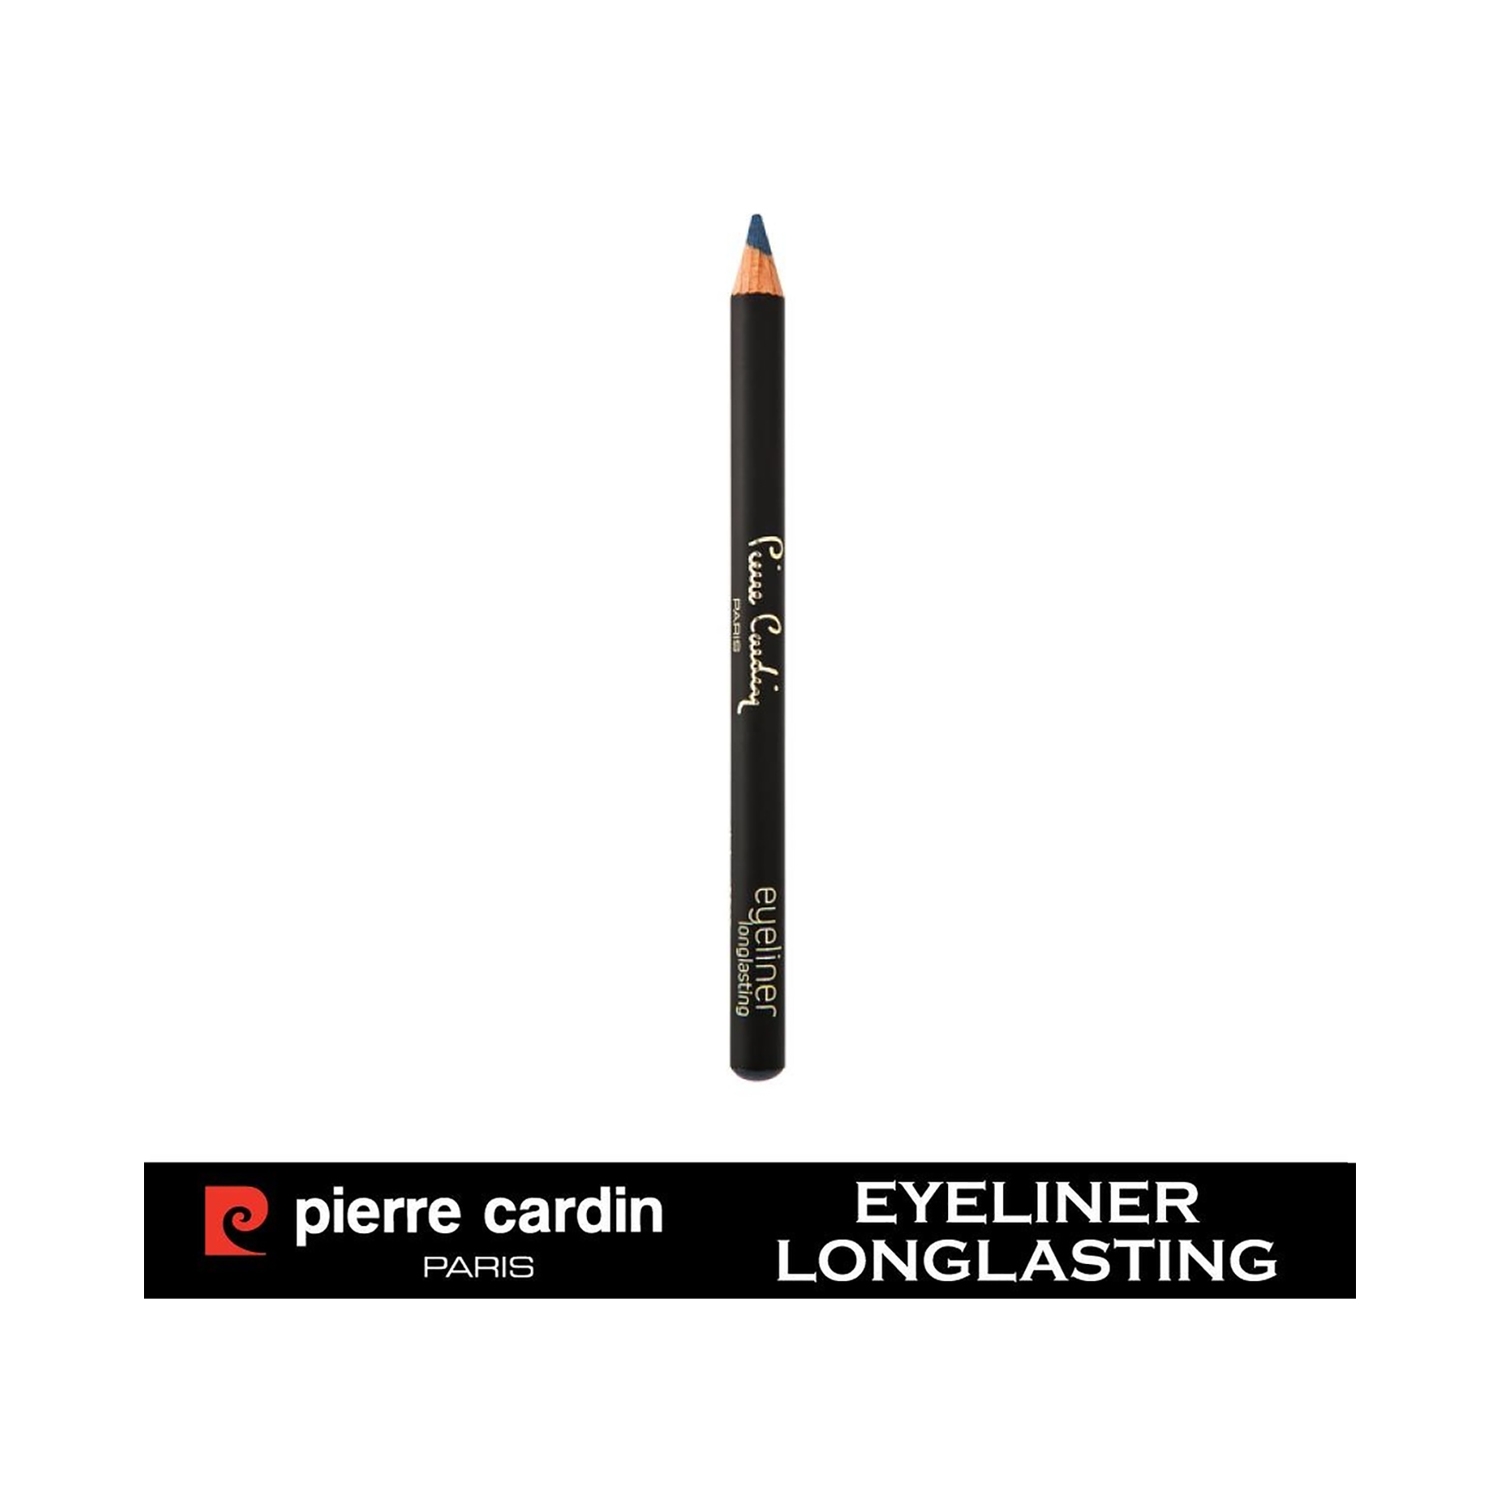 Pierre Cardin Paris | Pierre Cardin Paris Long Lasting Eyeliner Pencil - 305 Deep Ocean (0.04g)